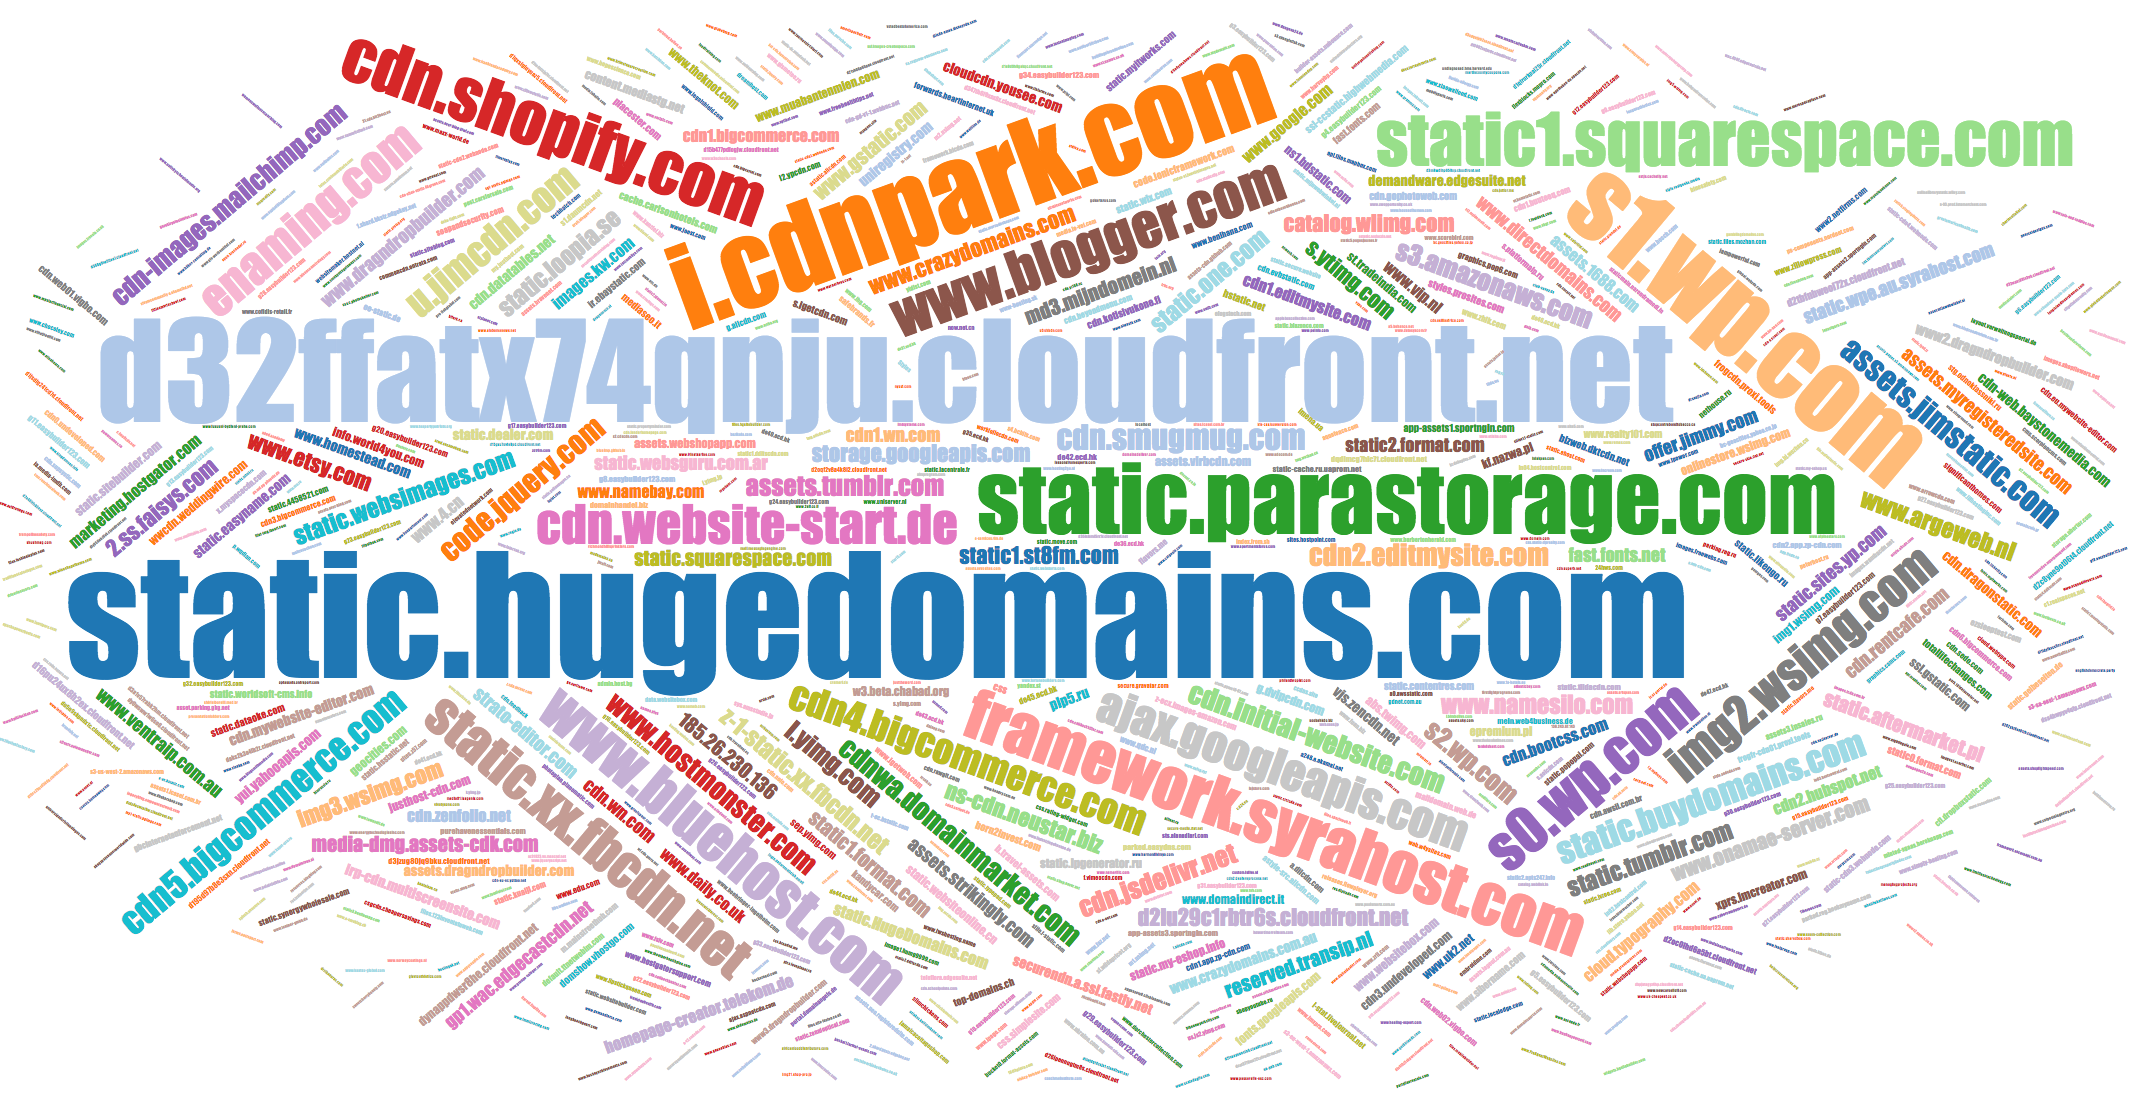 Popular names of CSS domains netdna.bootstrapcdn.com, ns-cdn.neustar.biz, etc.